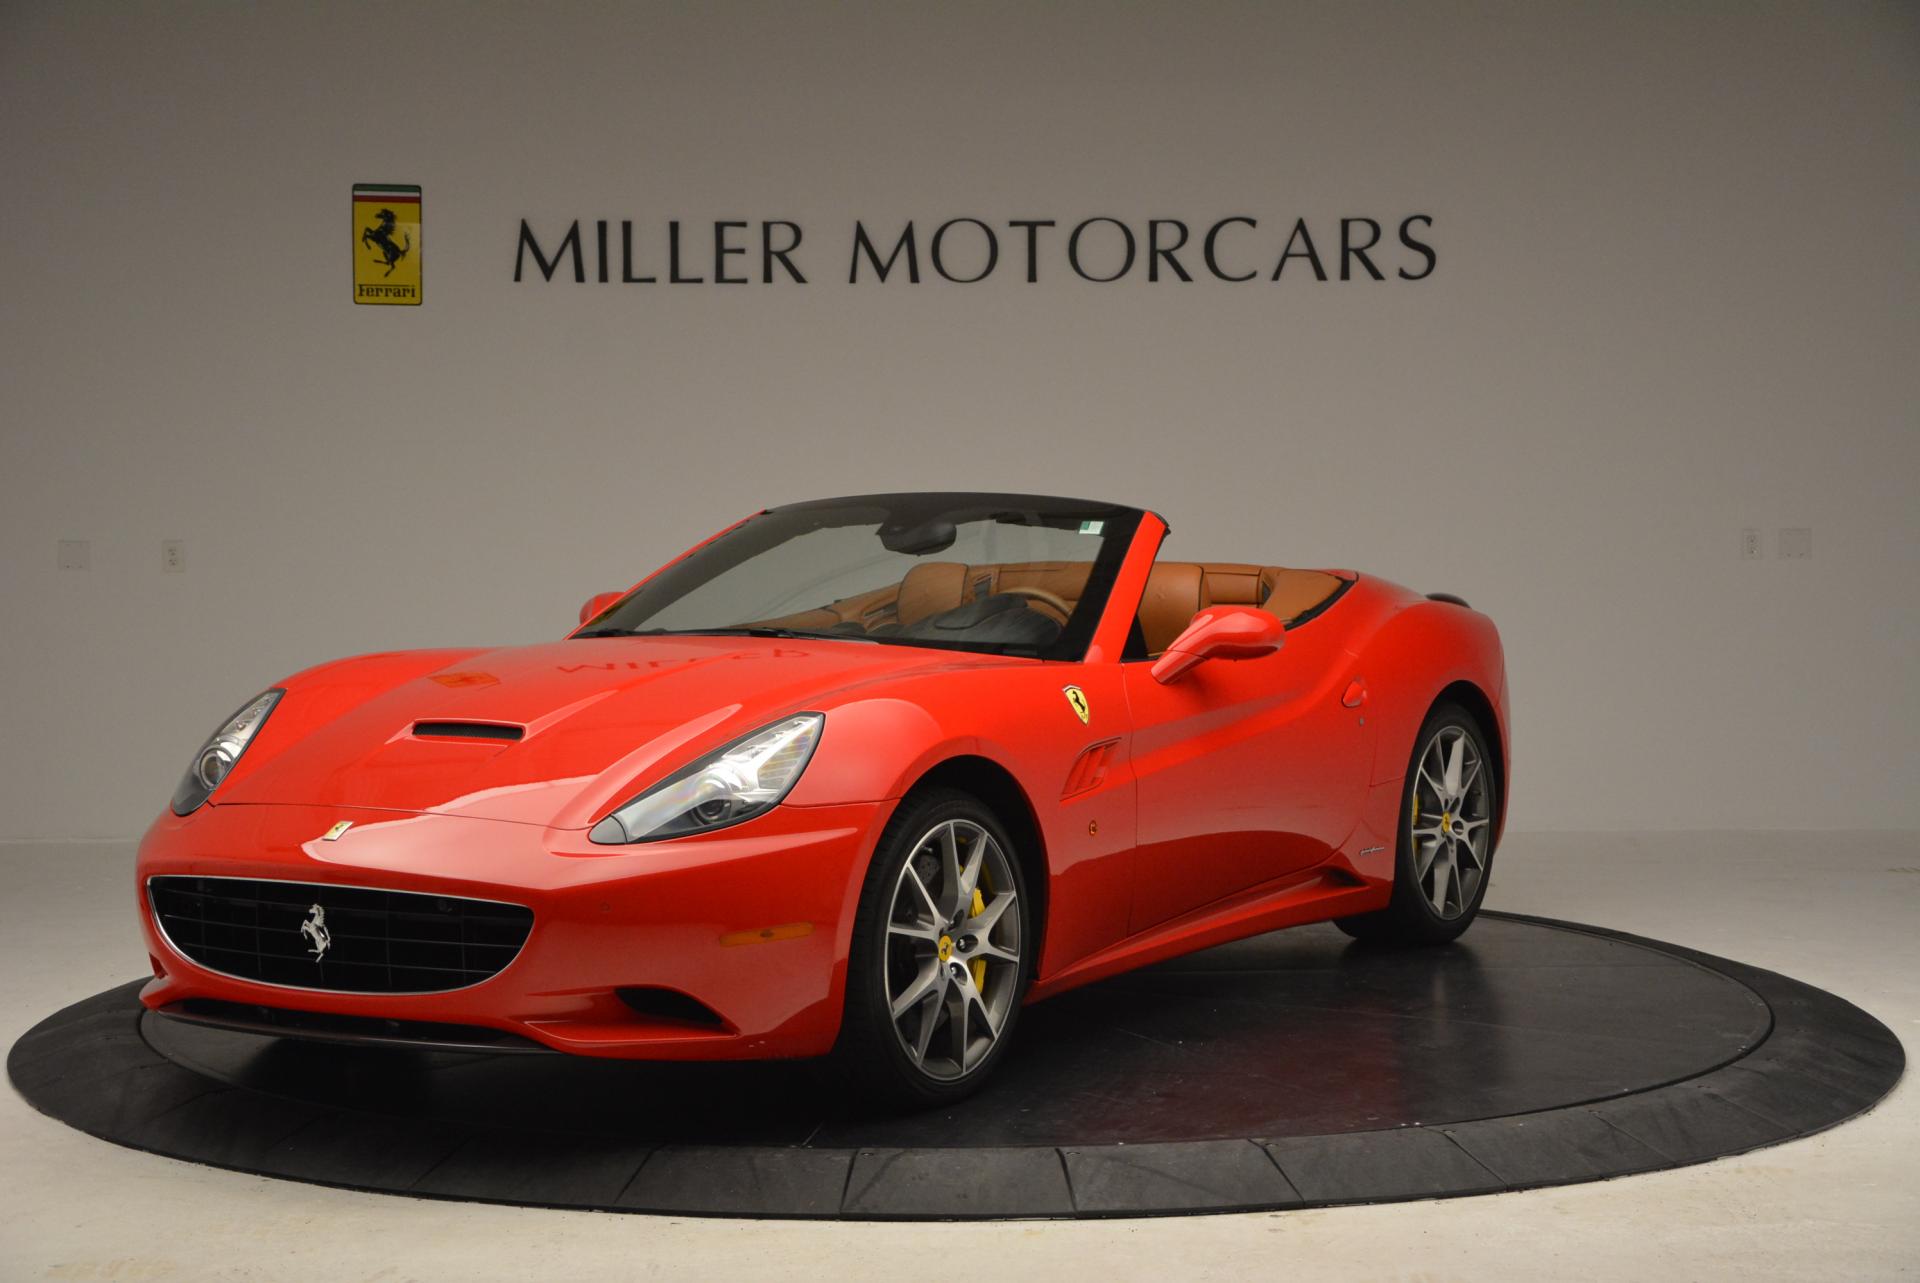 Used 2011 Ferrari California for sale Sold at Maserati of Greenwich in Greenwich CT 06830 1